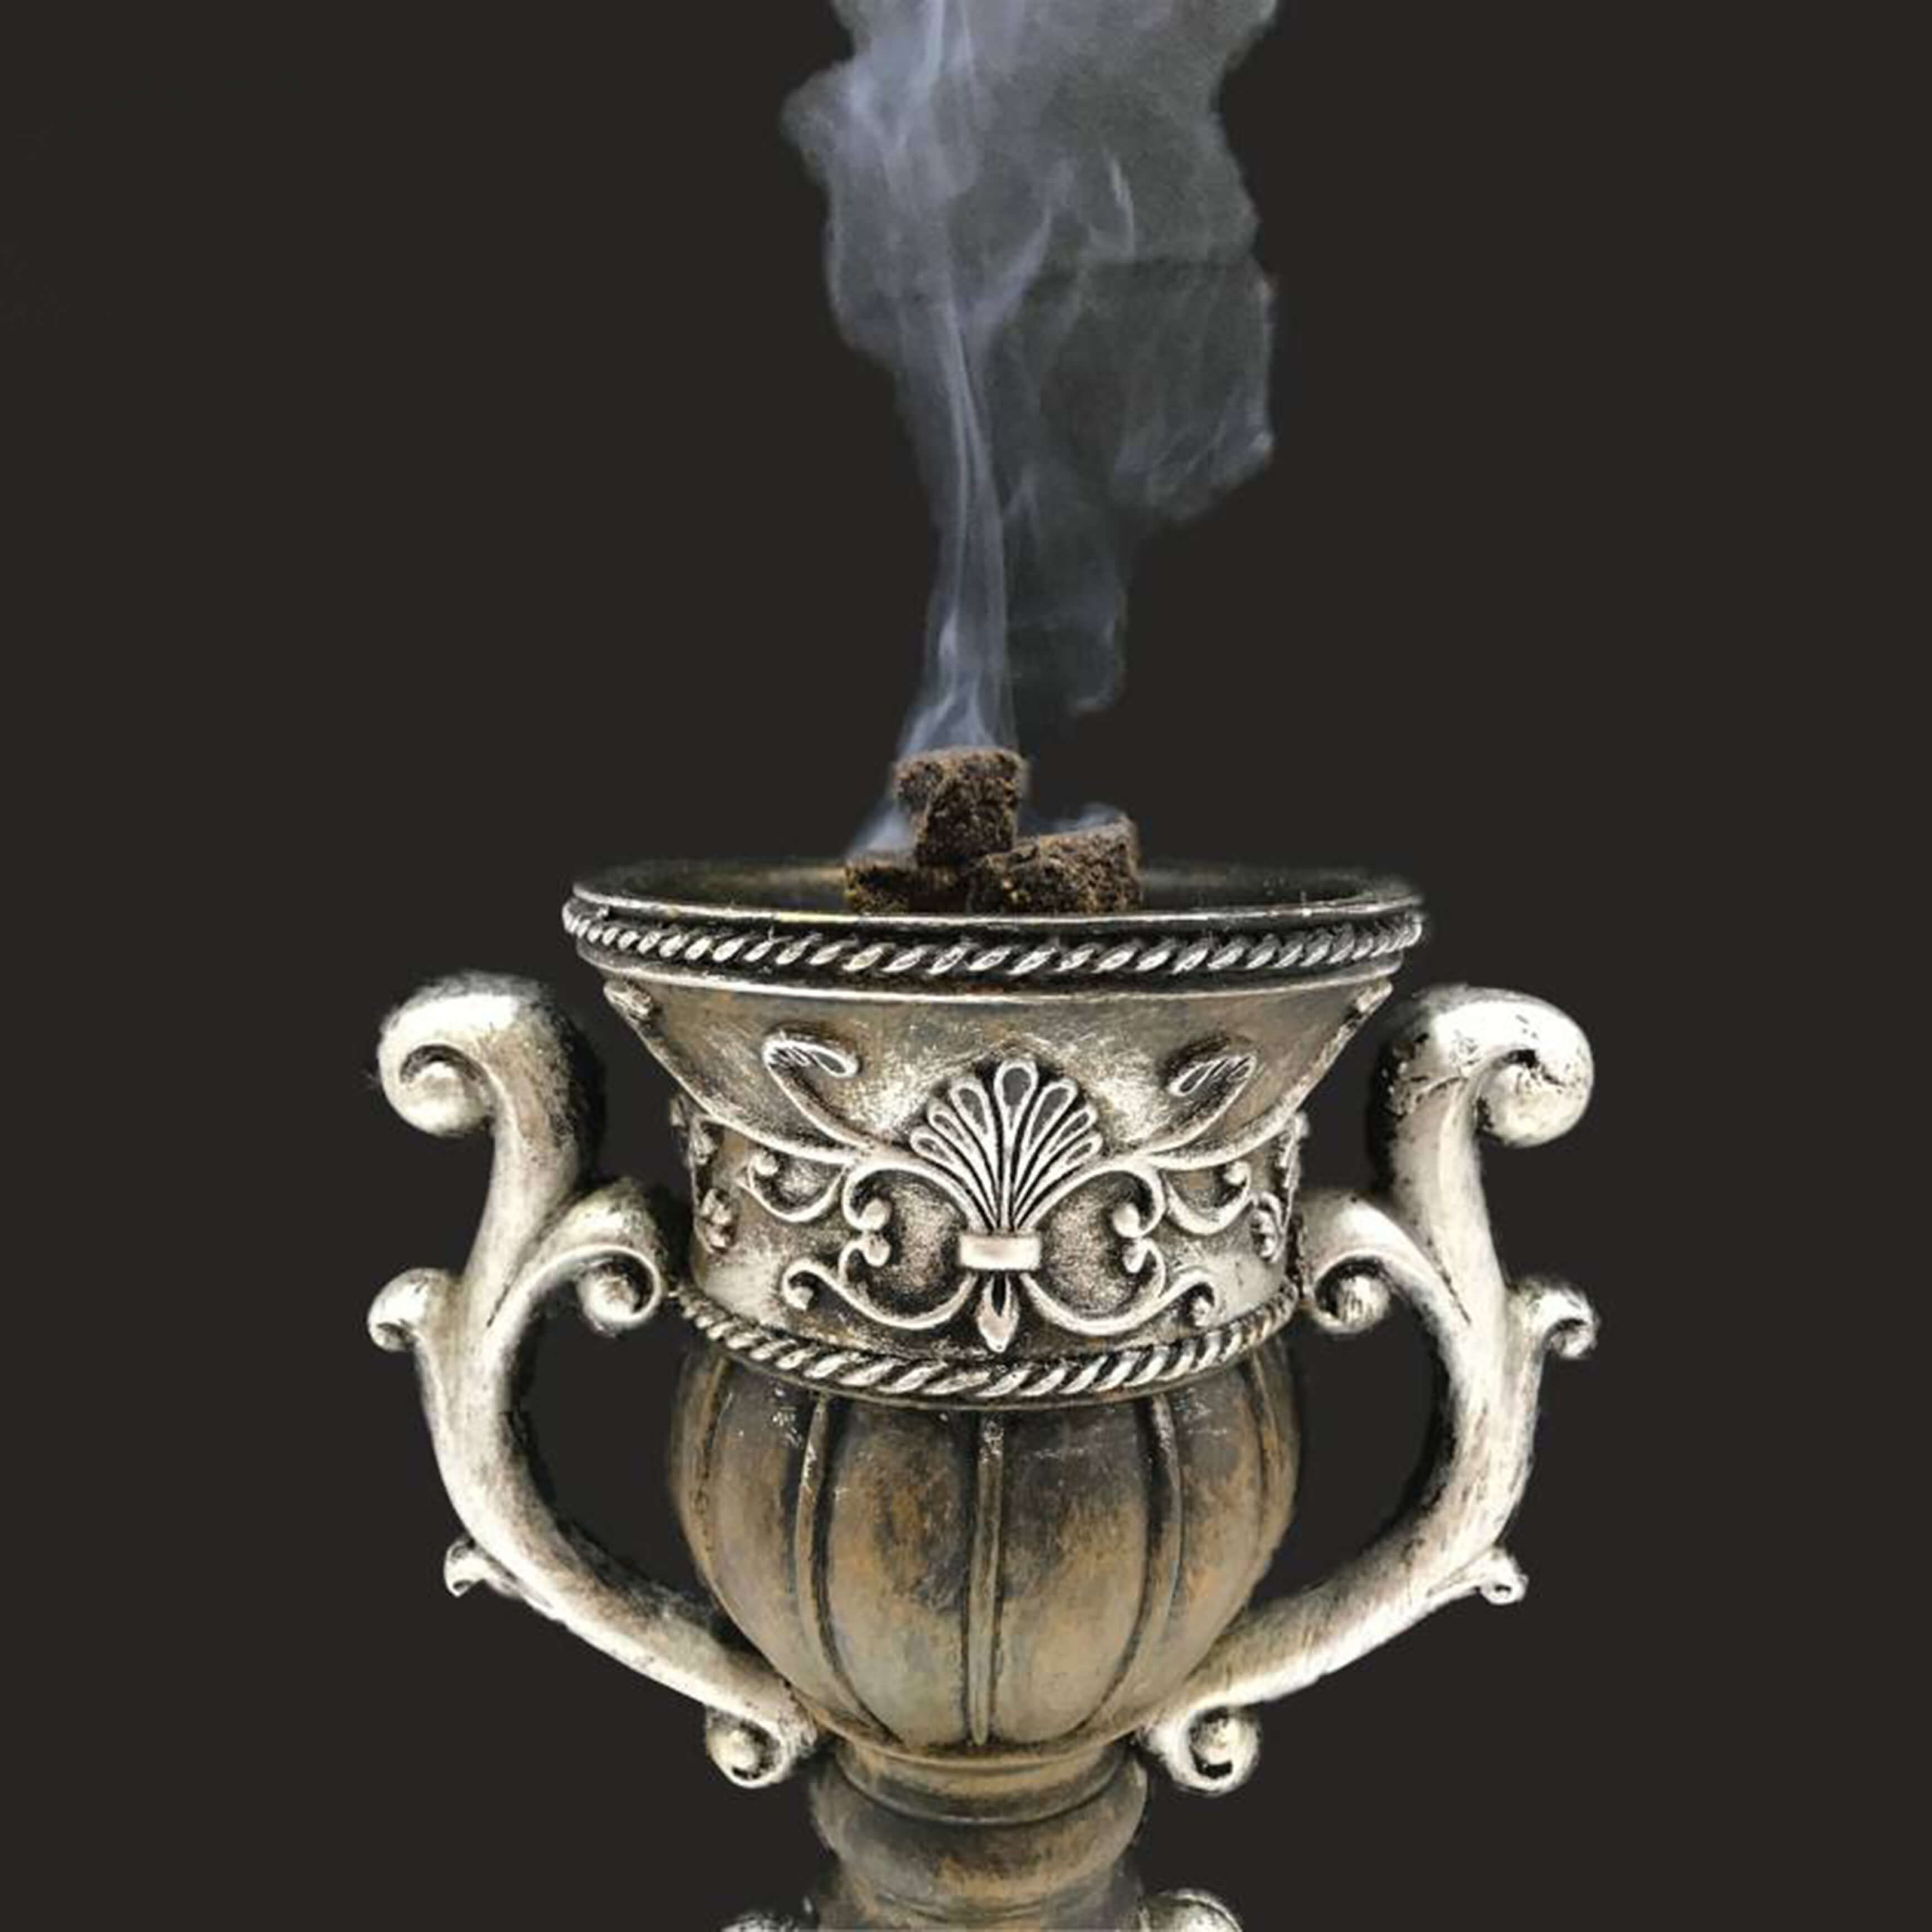 Al Alif Bukhoor Al-Marwah Bakhoor Coin Home Fragrance - 50g